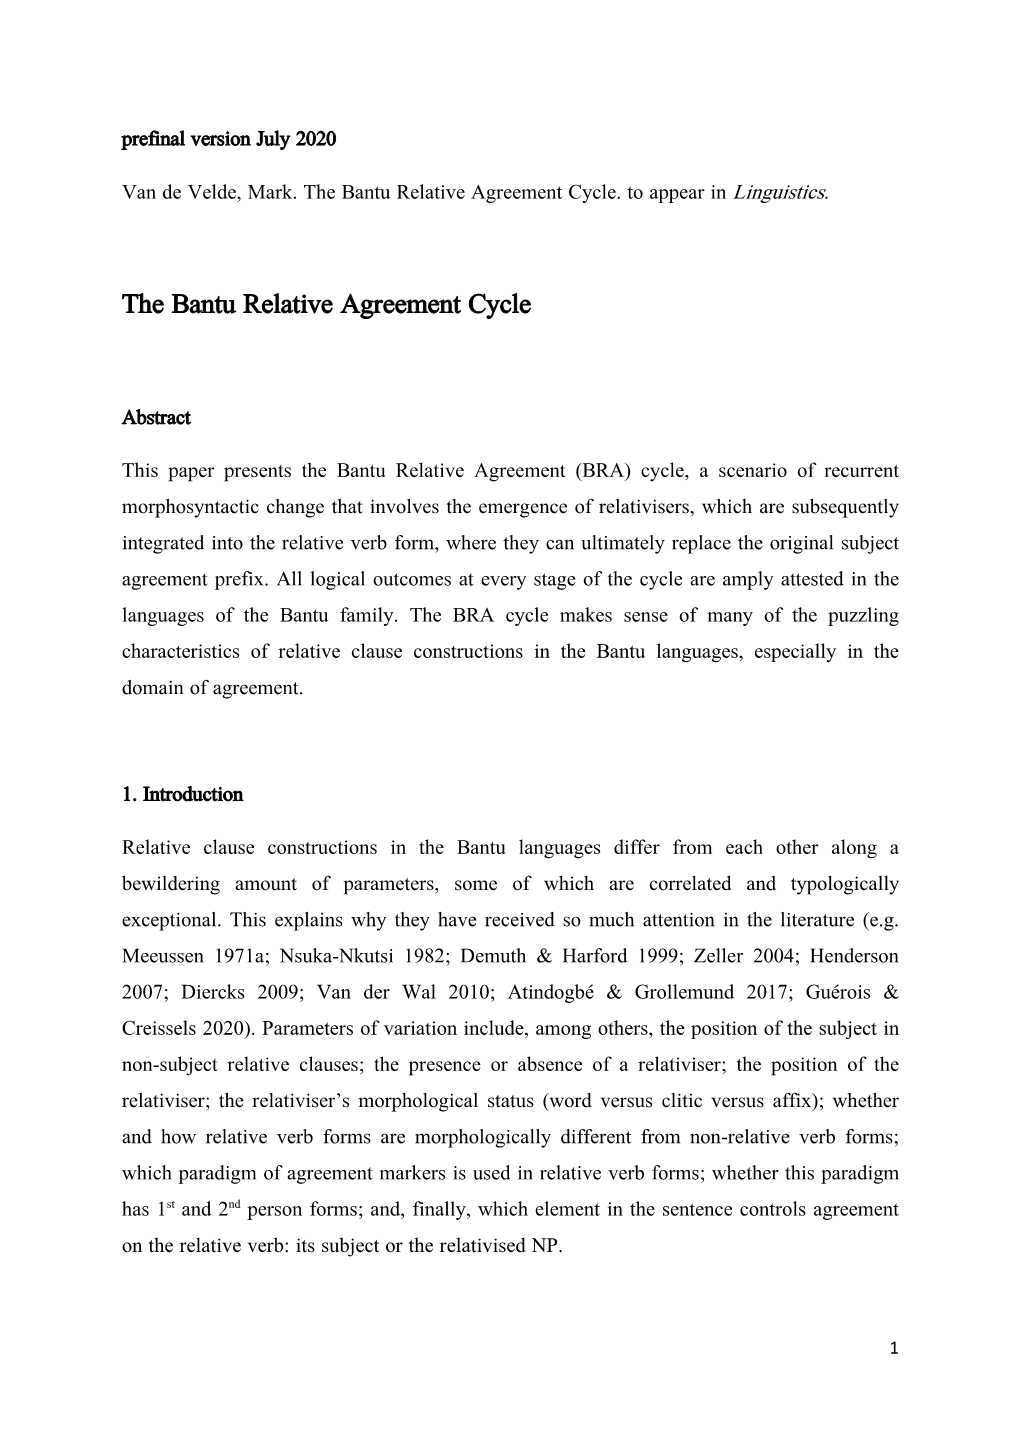 The Bantu Relative Agreement Cycle